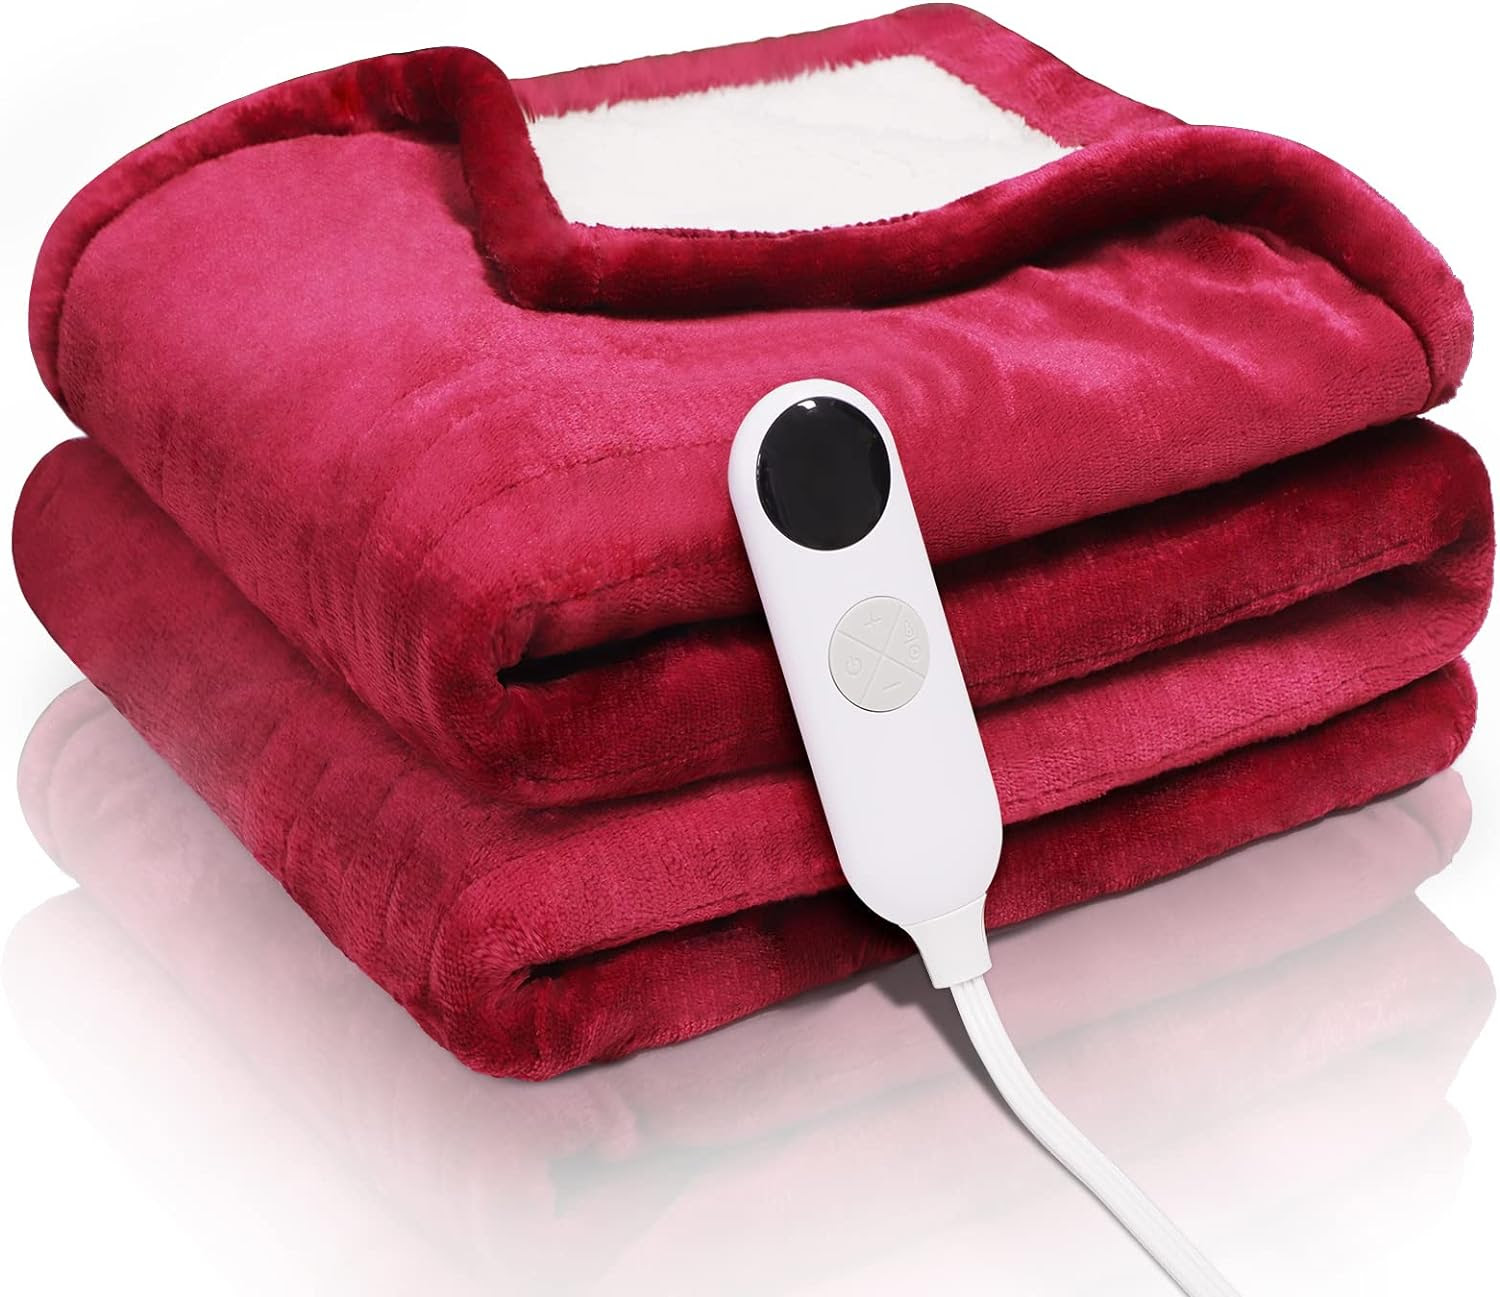  Heated Blanket Electric Throw - Soft Plush Fleece Flannel